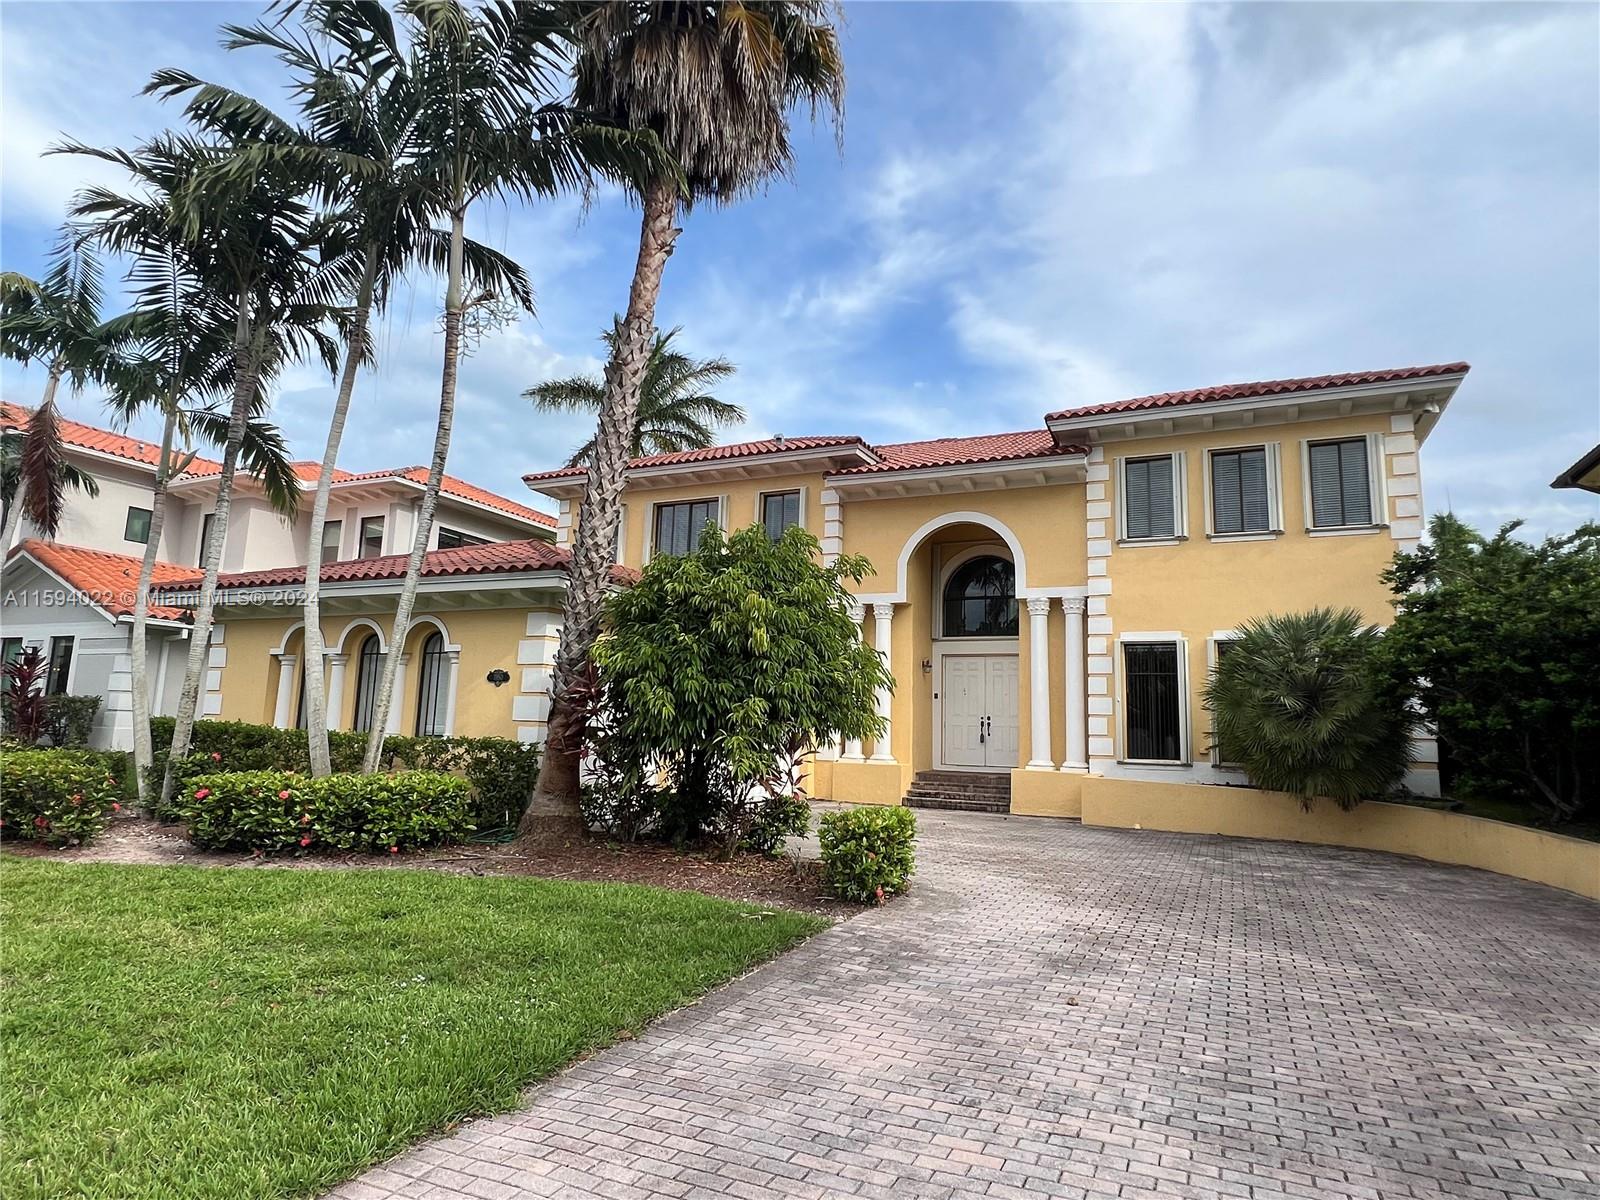 Rental Property at 7950 Sw 195th Ter Ter, Cutler Bay, Miami-Dade County, Florida - Bedrooms: 5 
Bathrooms: 5  - $6,000 MO.